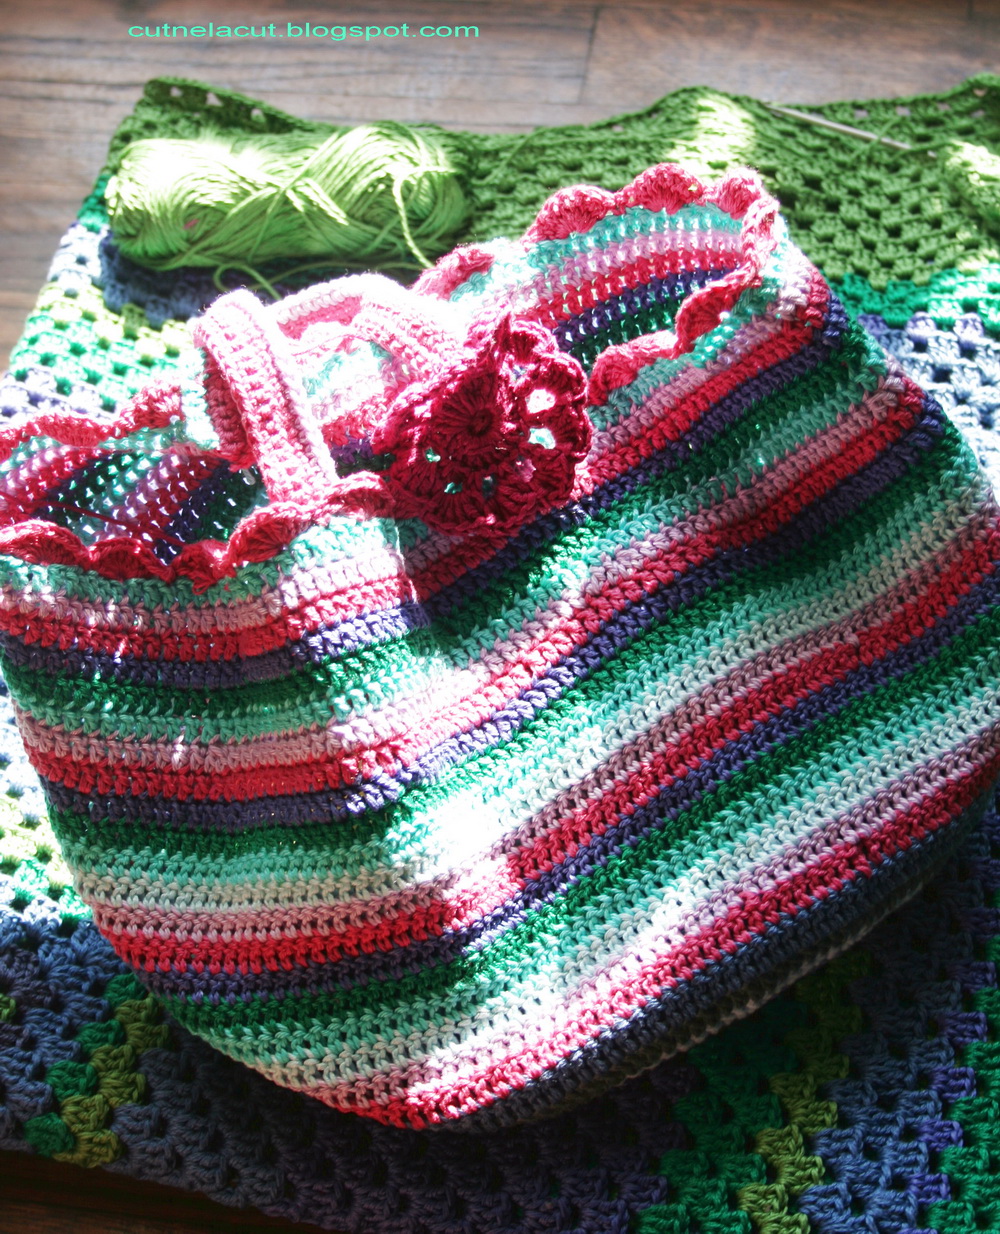 cut, nela, cut: Crochet bag